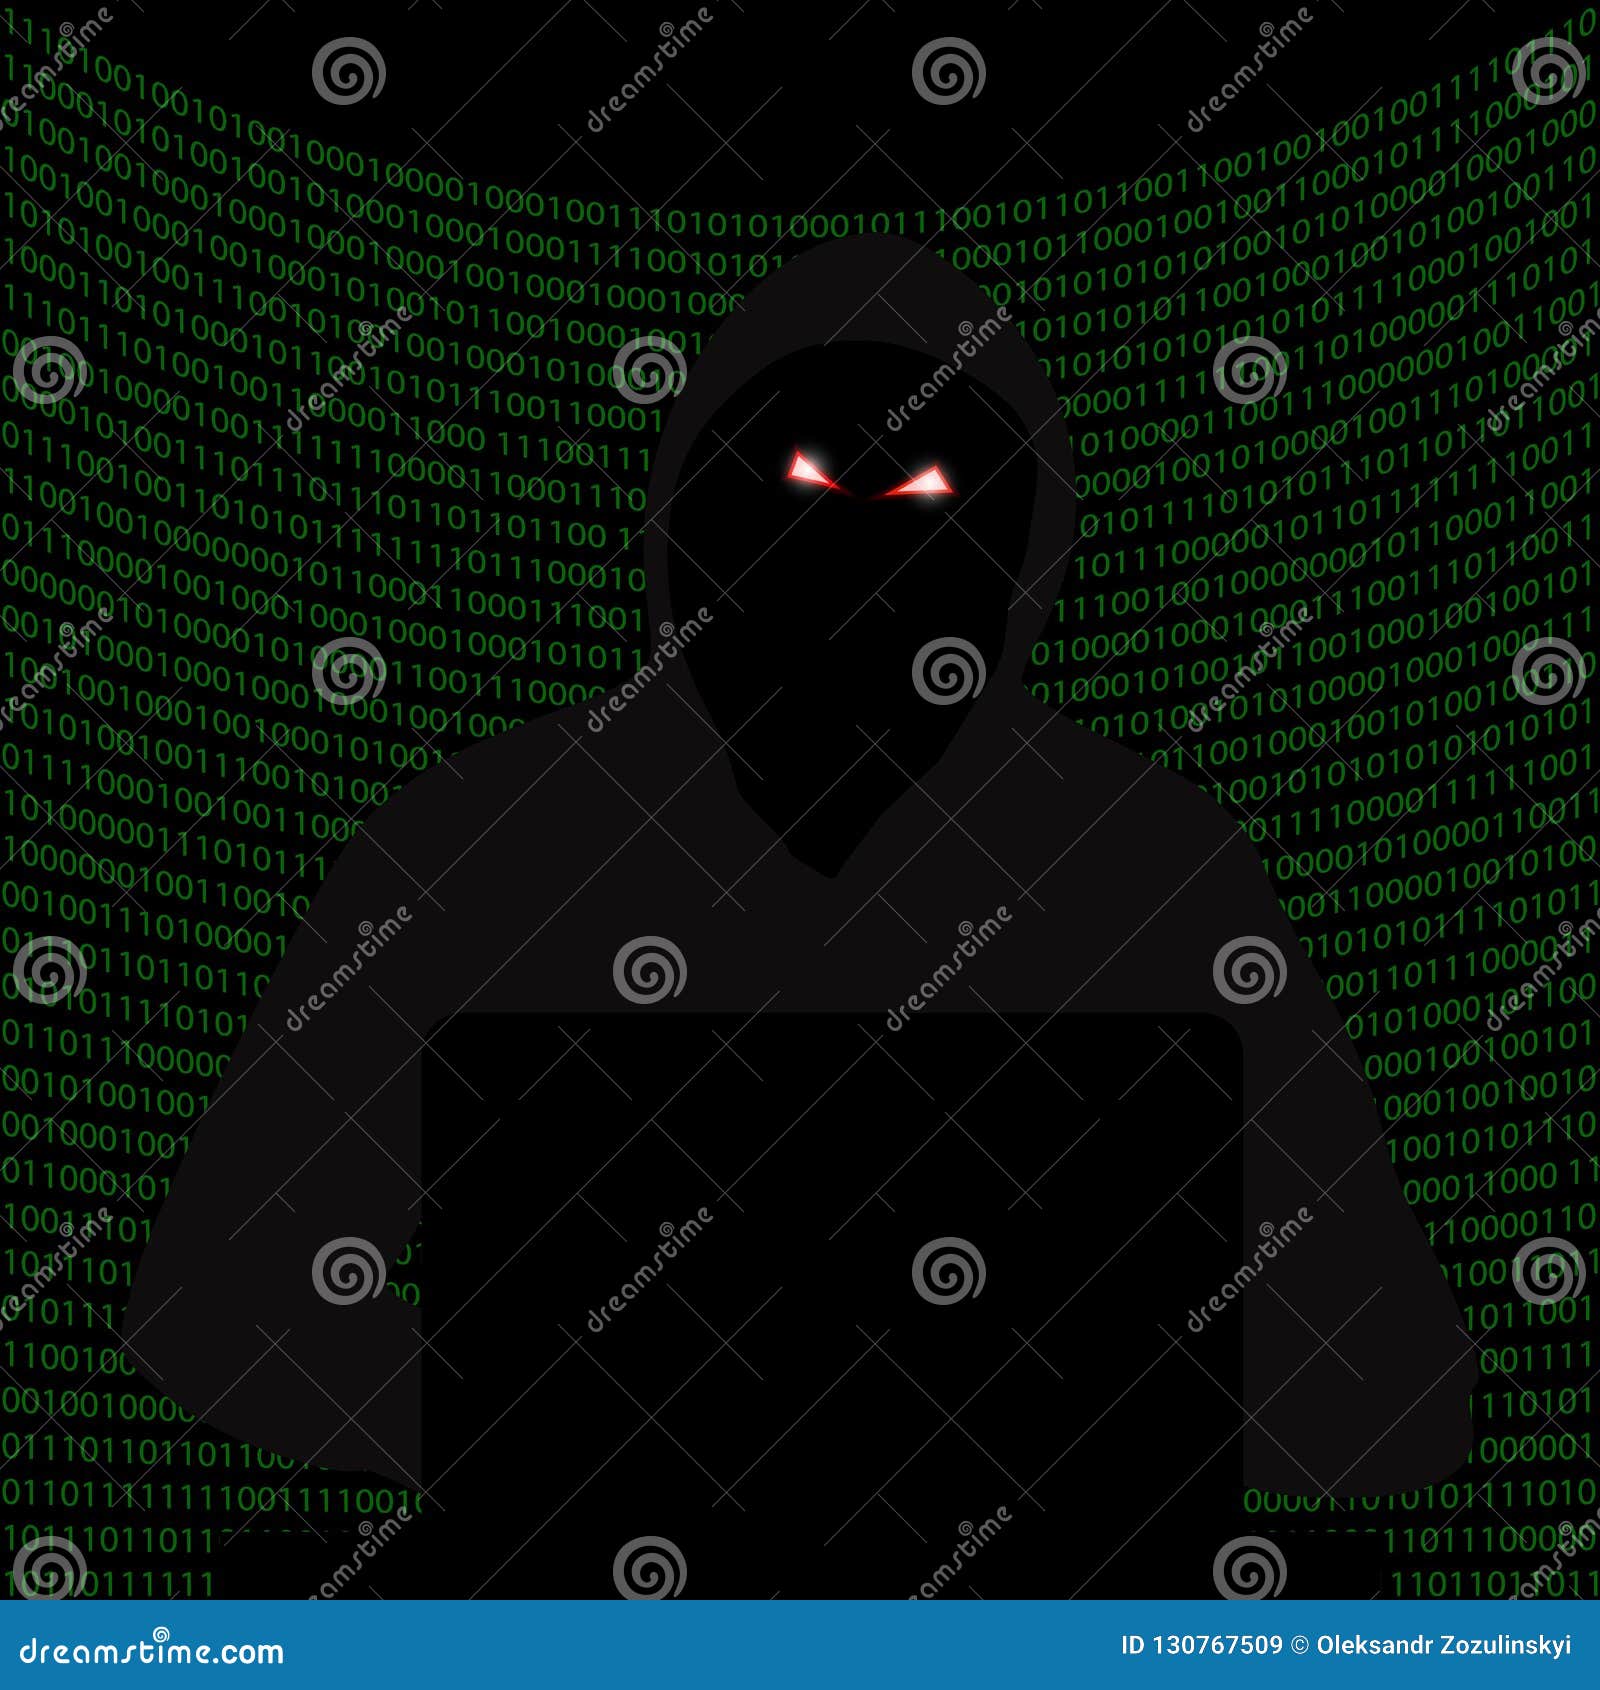 hacker darknet